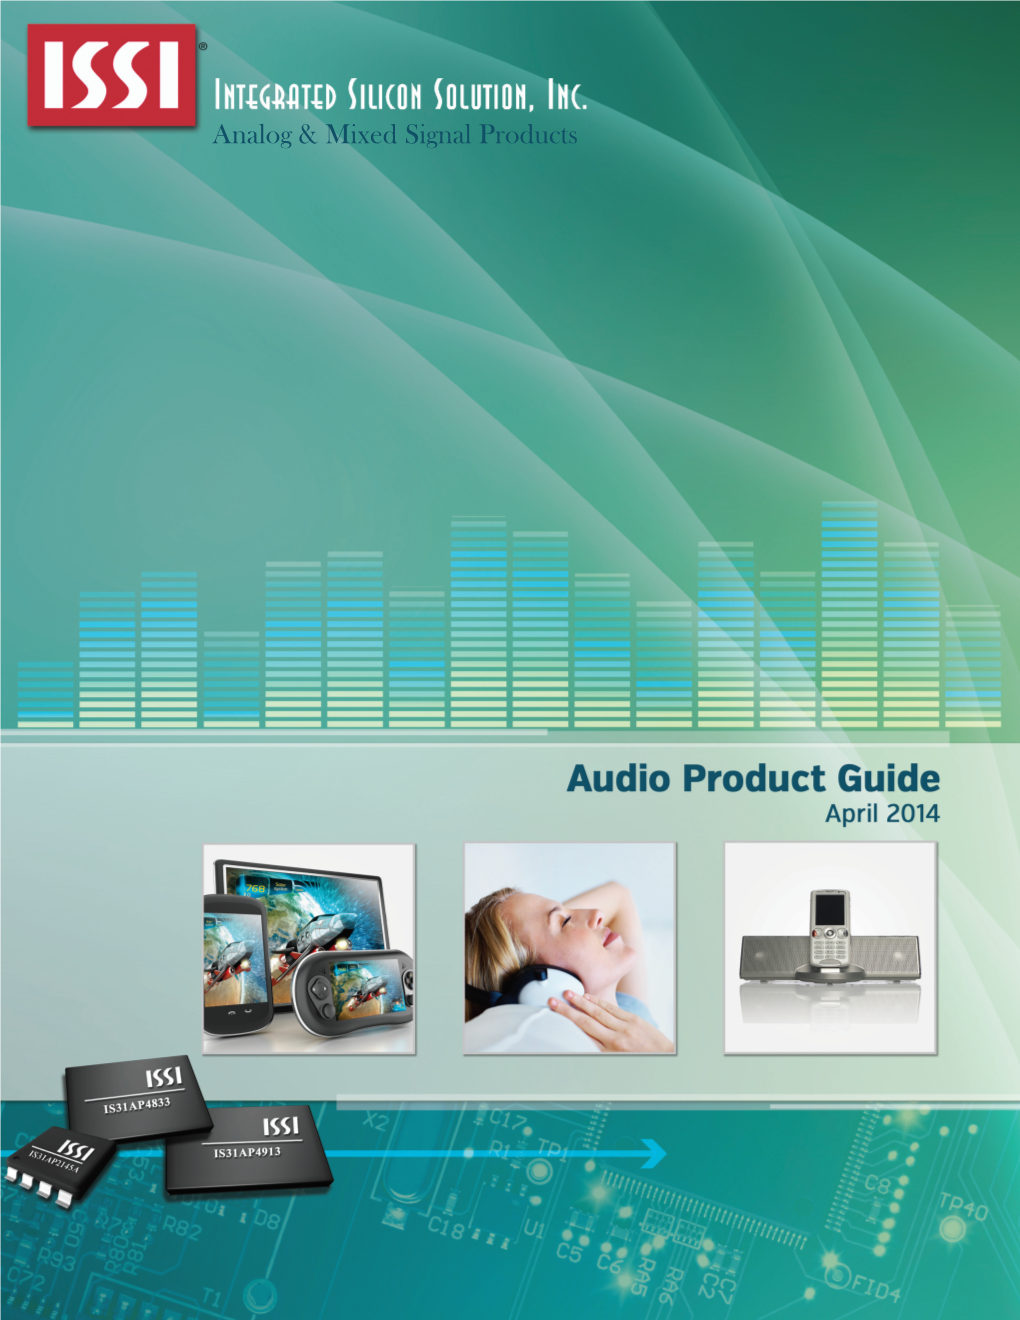 Analog & Mixed Signal Products